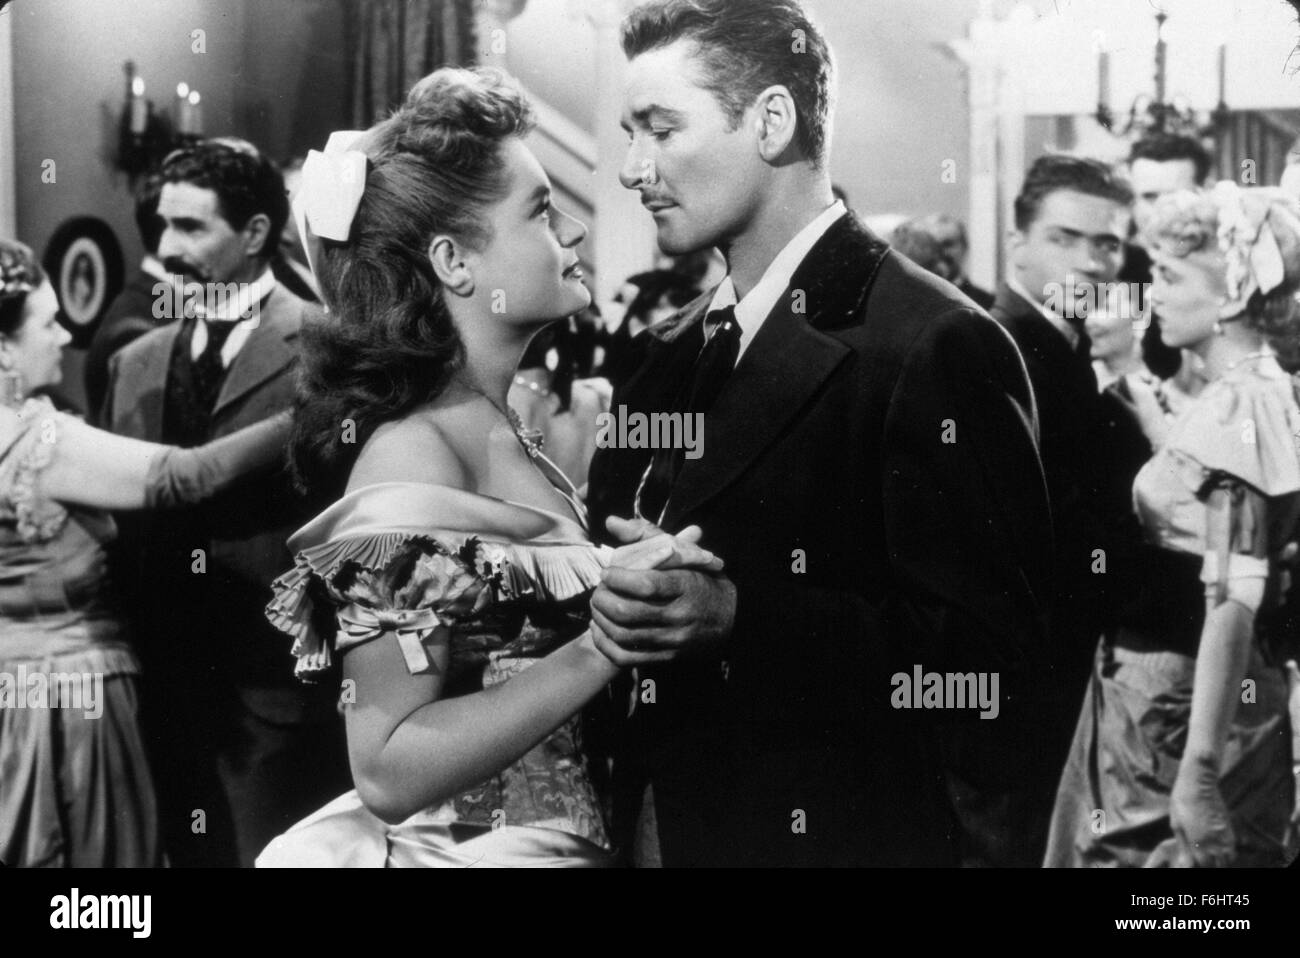 1950, le titre du film : MONTANA, Directeur : RAY ENRIGHT, Studio : WARNER, Photo : RAY ENRIGHT, Errol Flynn. (Crédit Image : SNAP) Banque D'Images